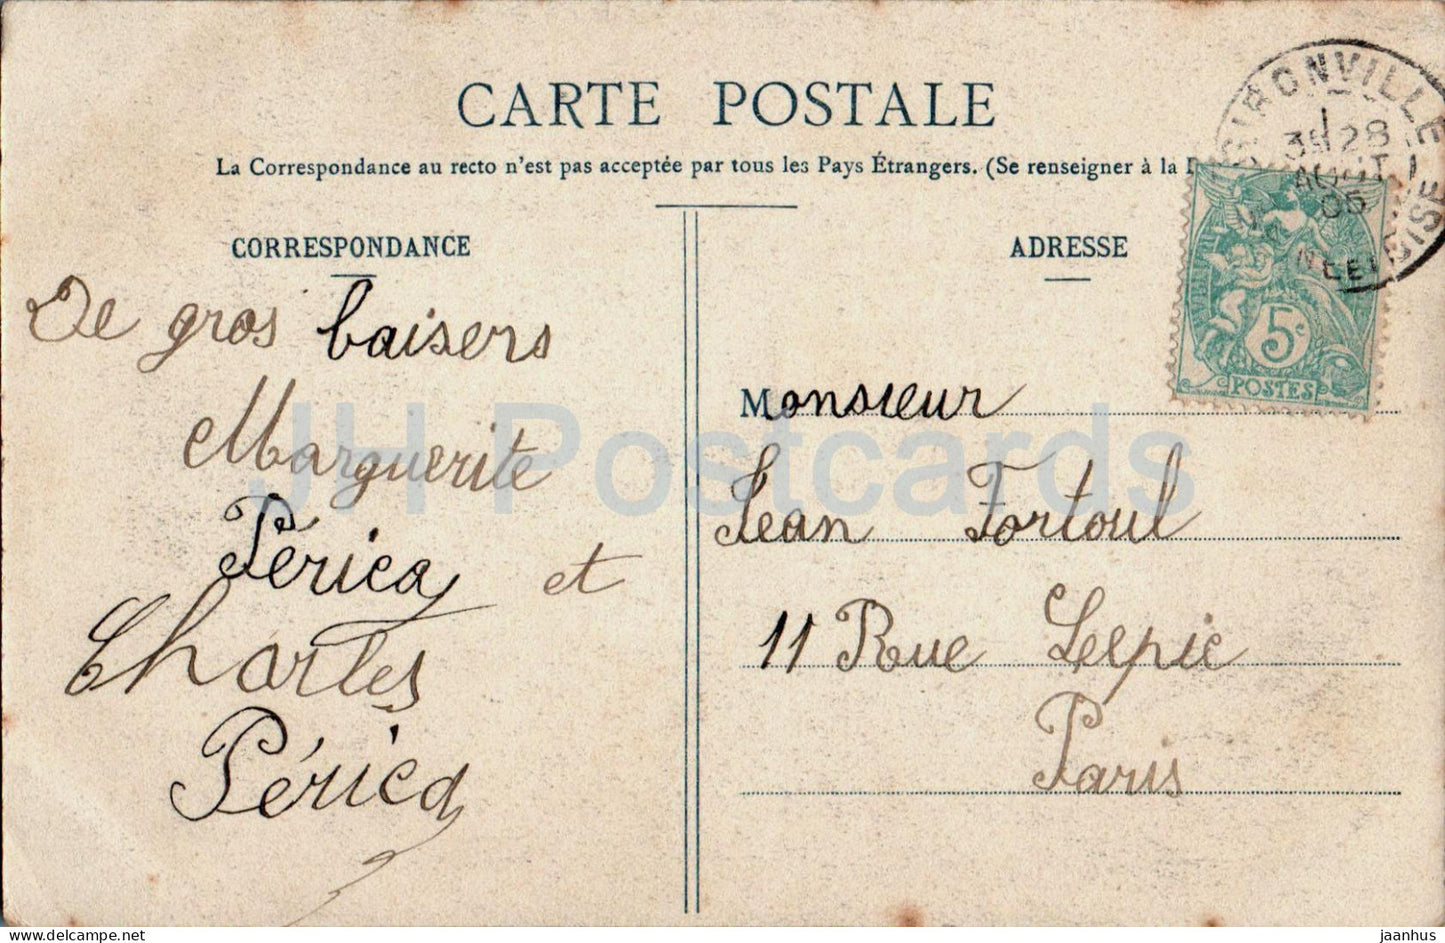 Malesherbes - L'Essonne au Pont du Couvent - alte Postkarte - 1905 - Frankreich - gebraucht